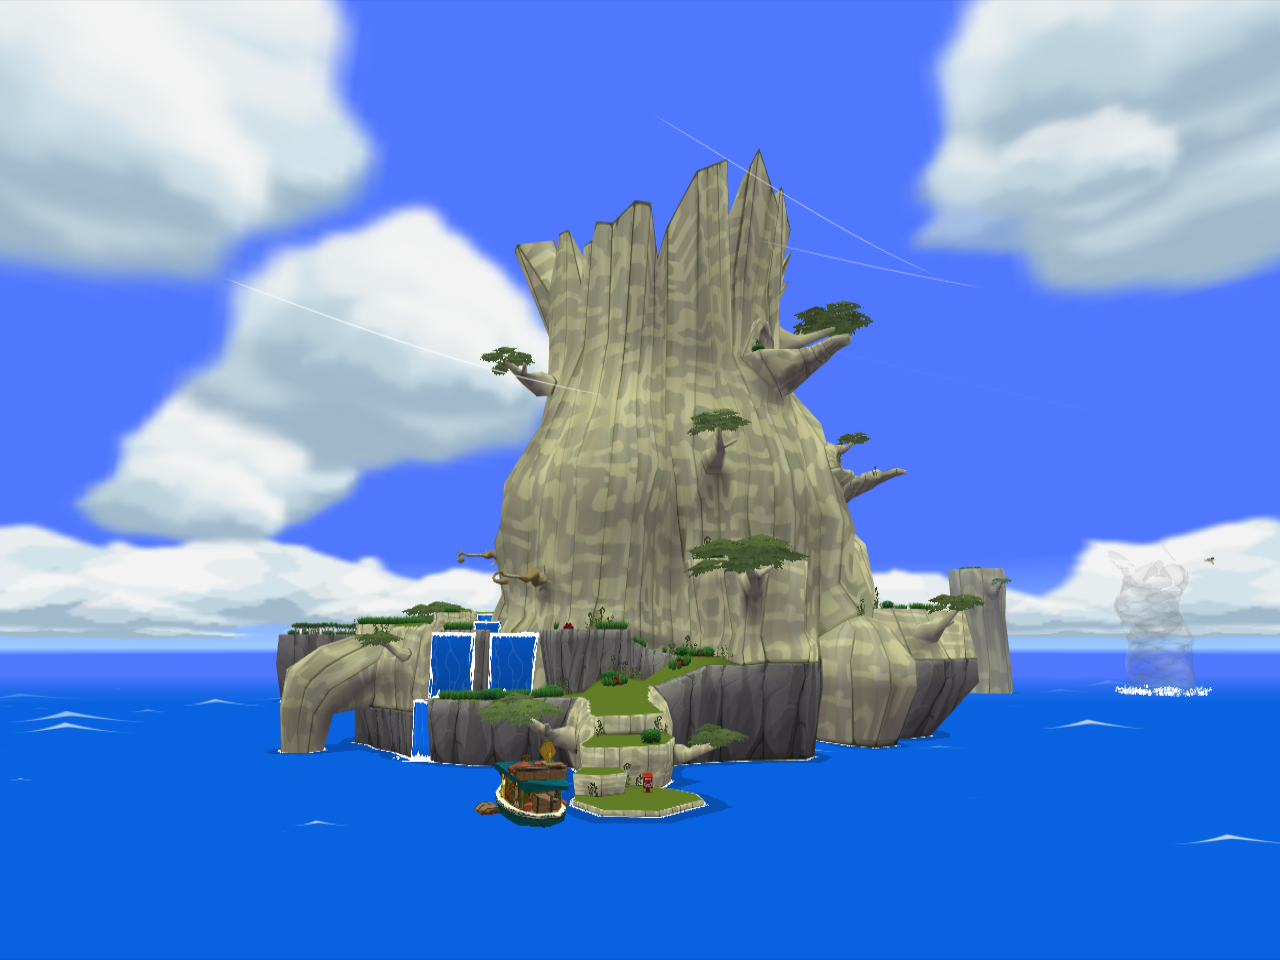 Wind Waker, Zeldapedia